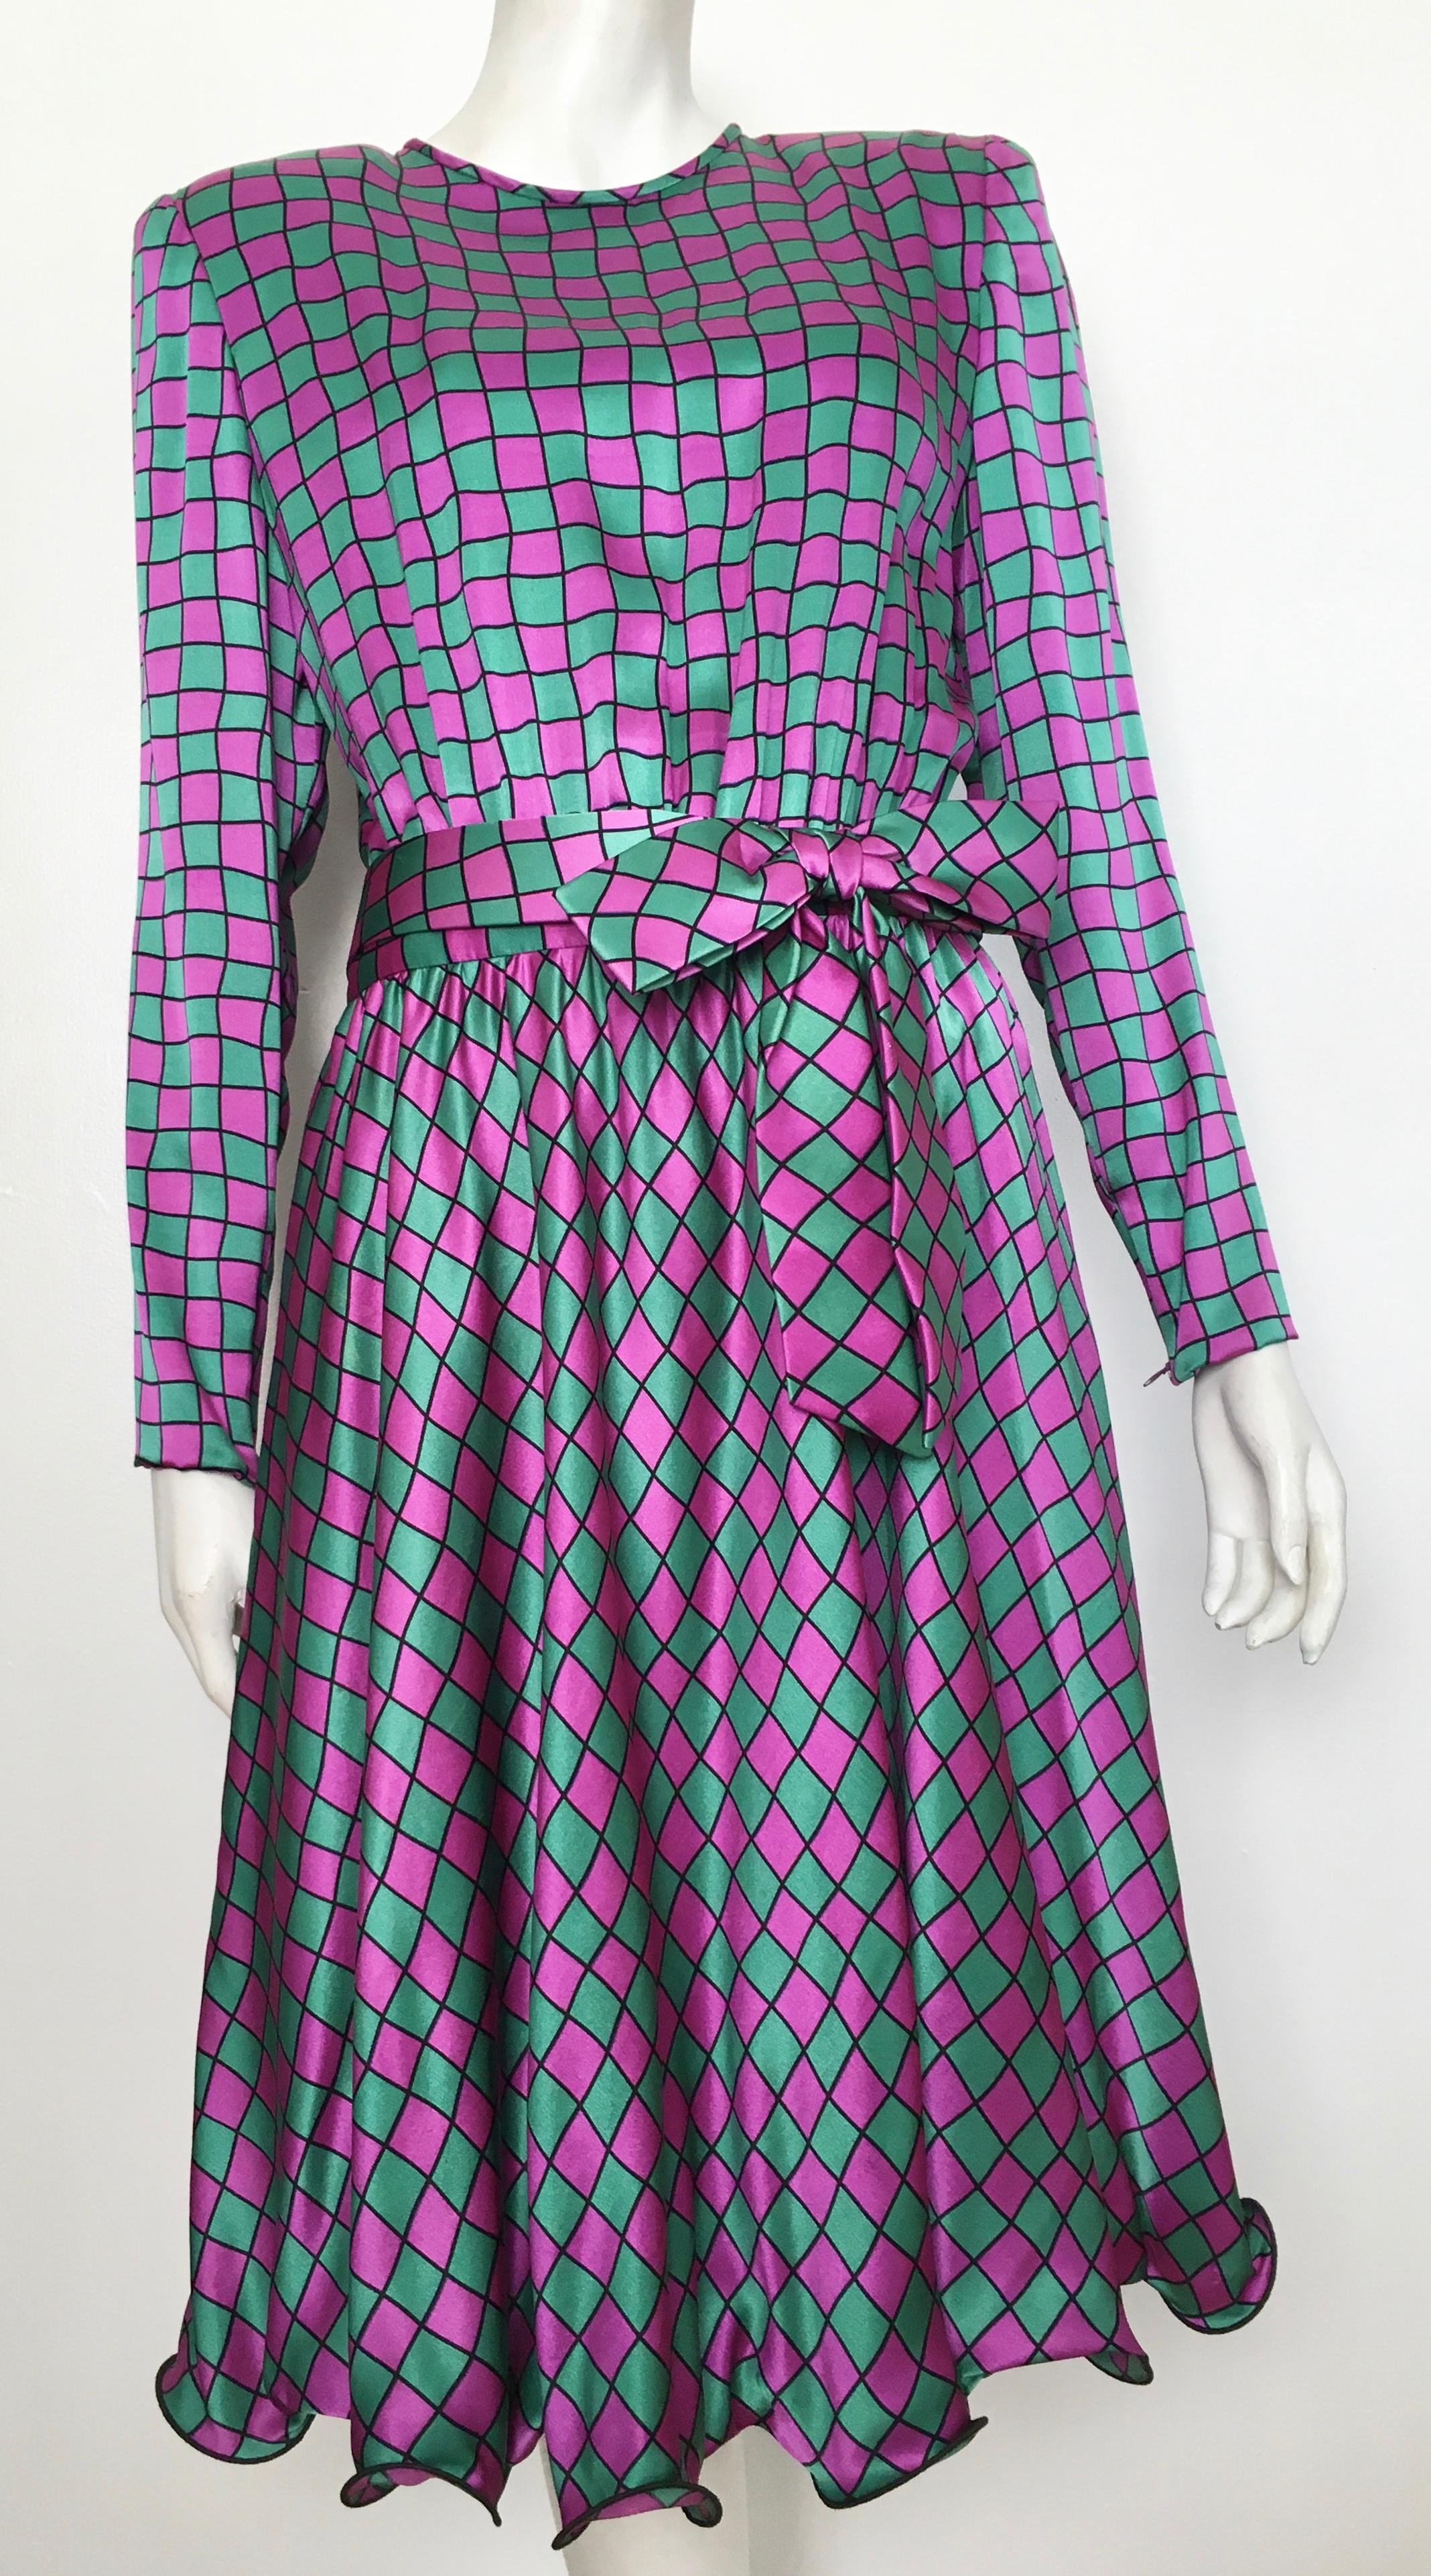 Stanley Platos Martin Ross Silk Evening Dress with Belt, 1980s  For Sale 6